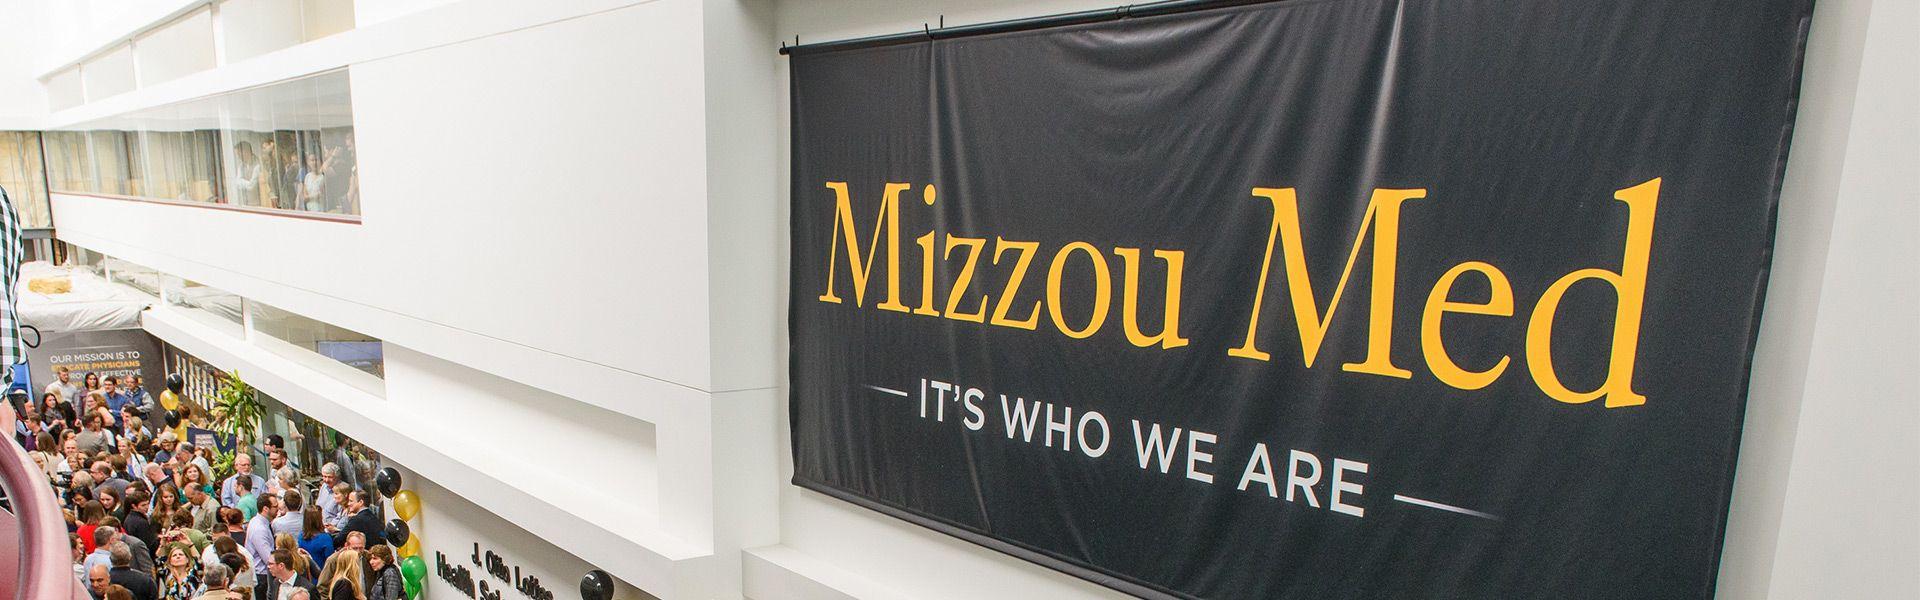 We Are Mizzou Logo - University of Missouri Health Care